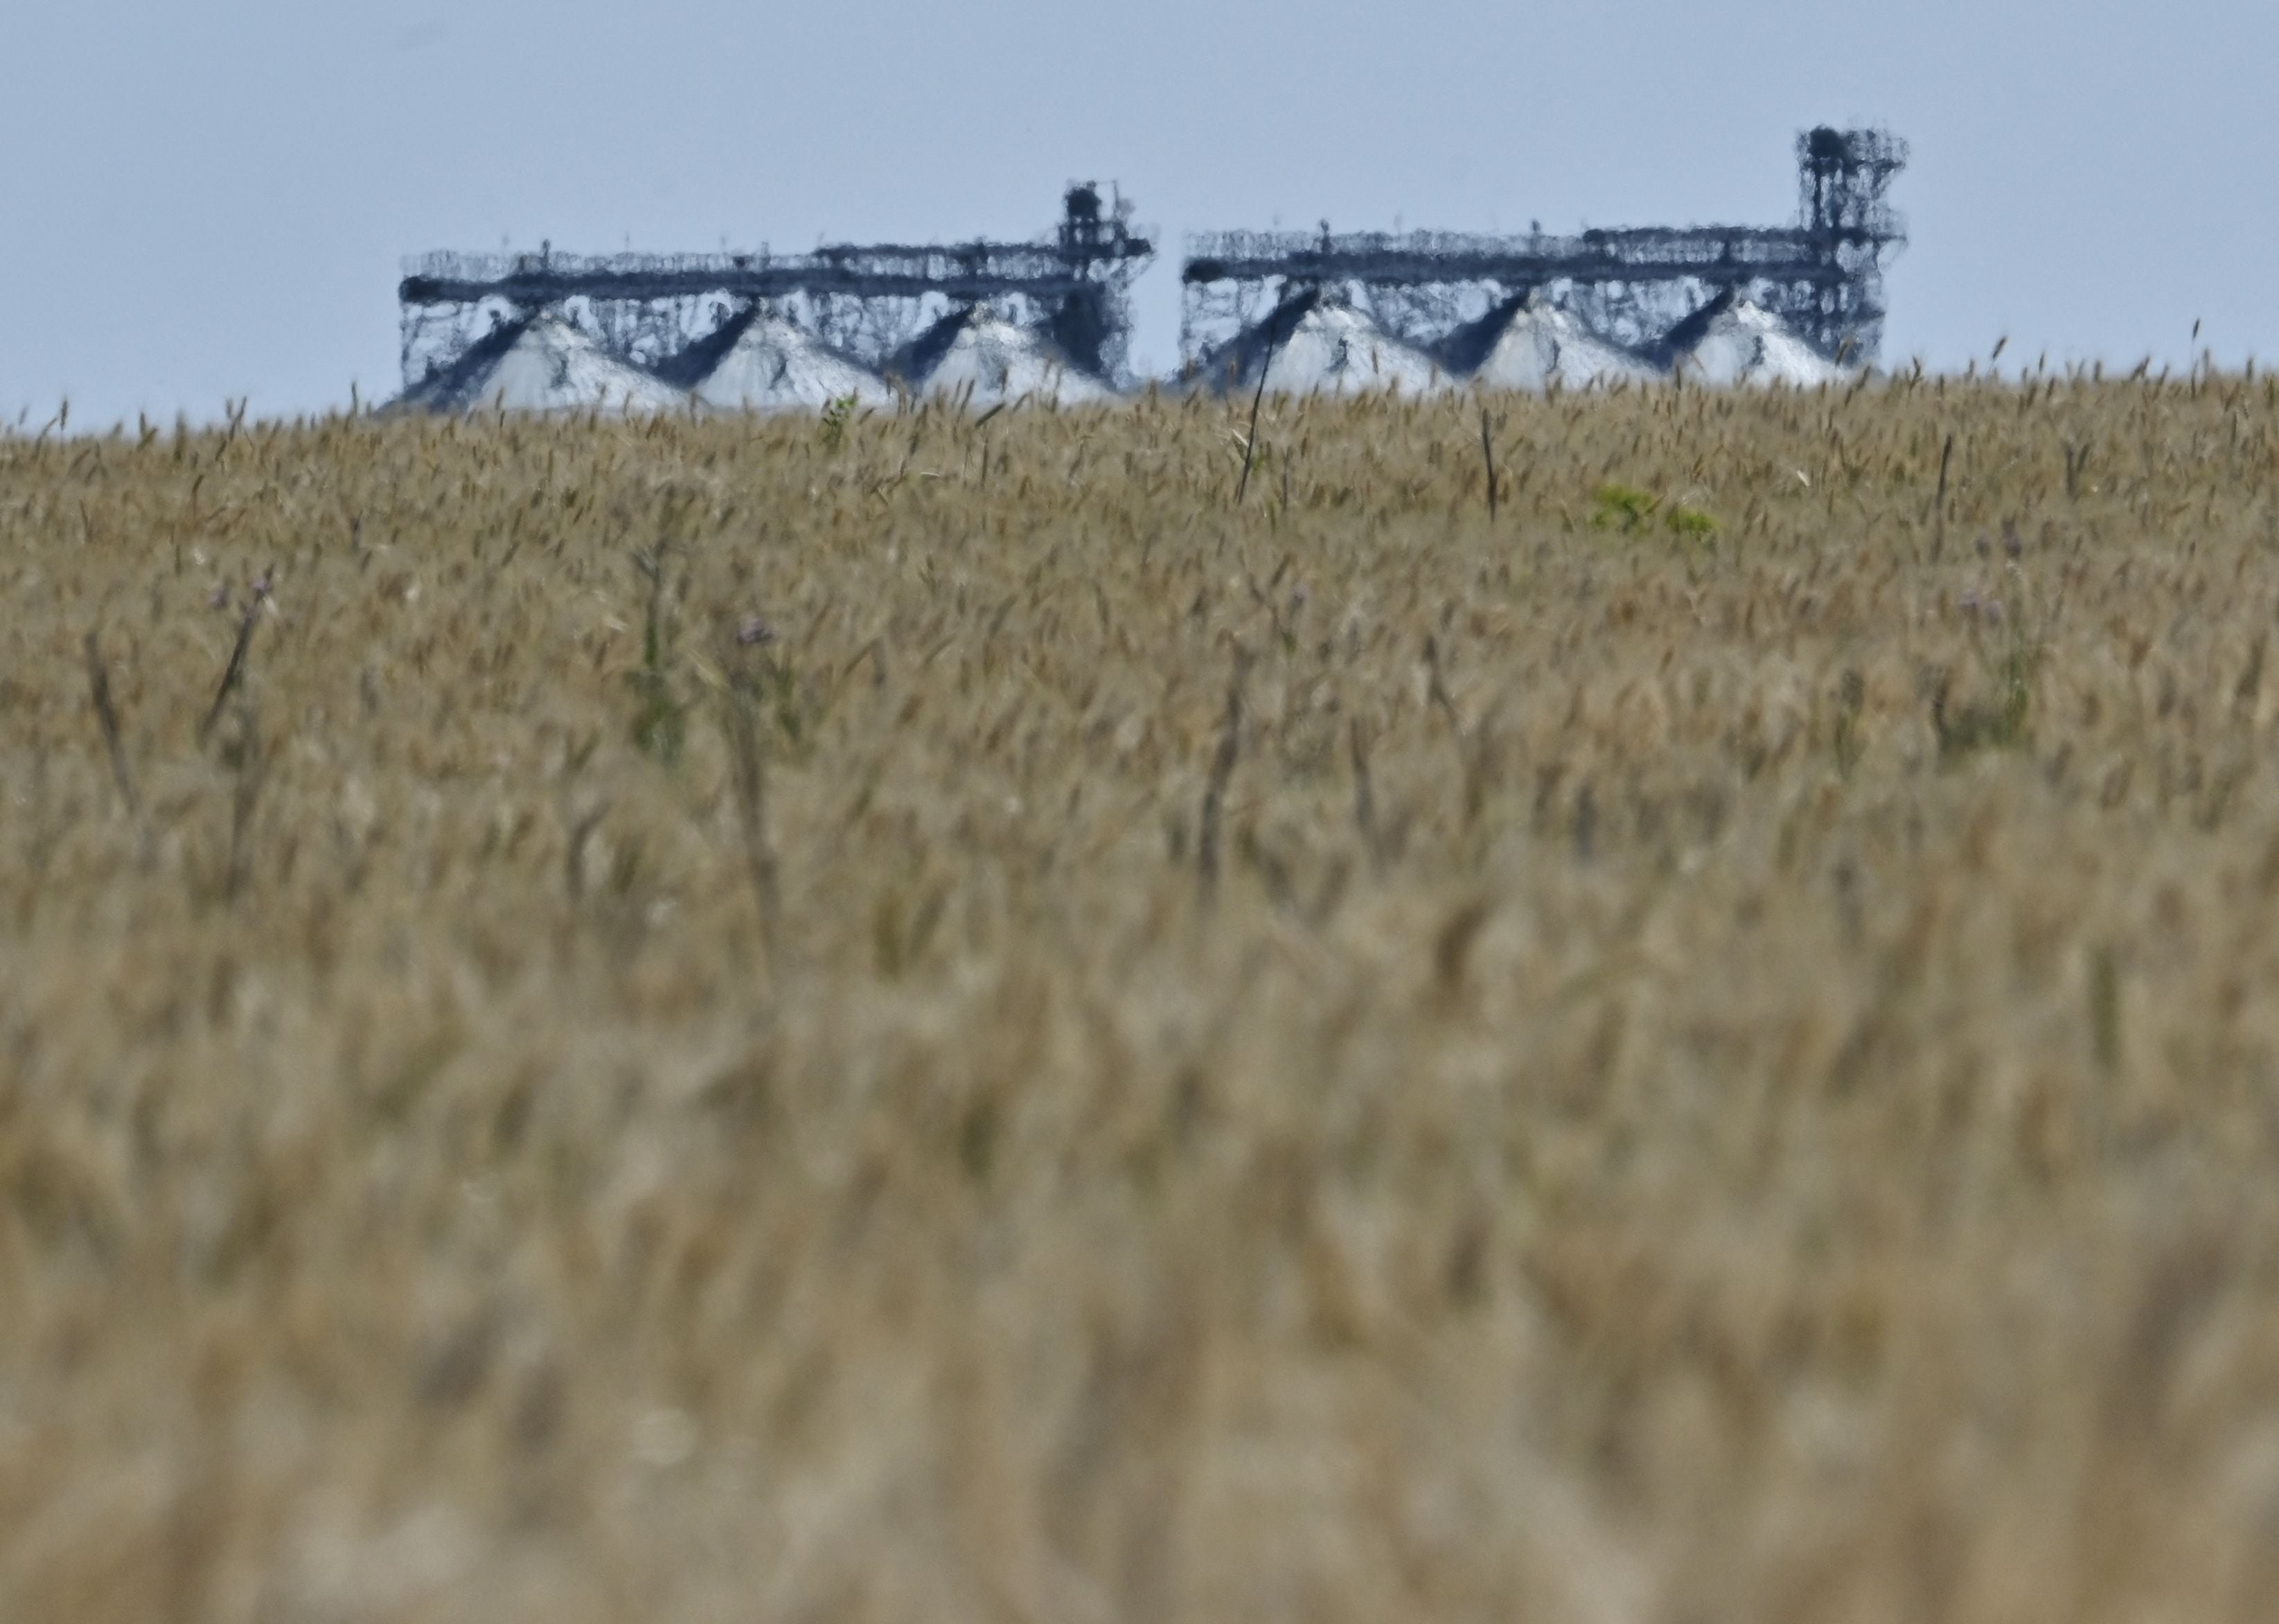 A wheat field in Ukraine’s eastern Donbas region earlier this month